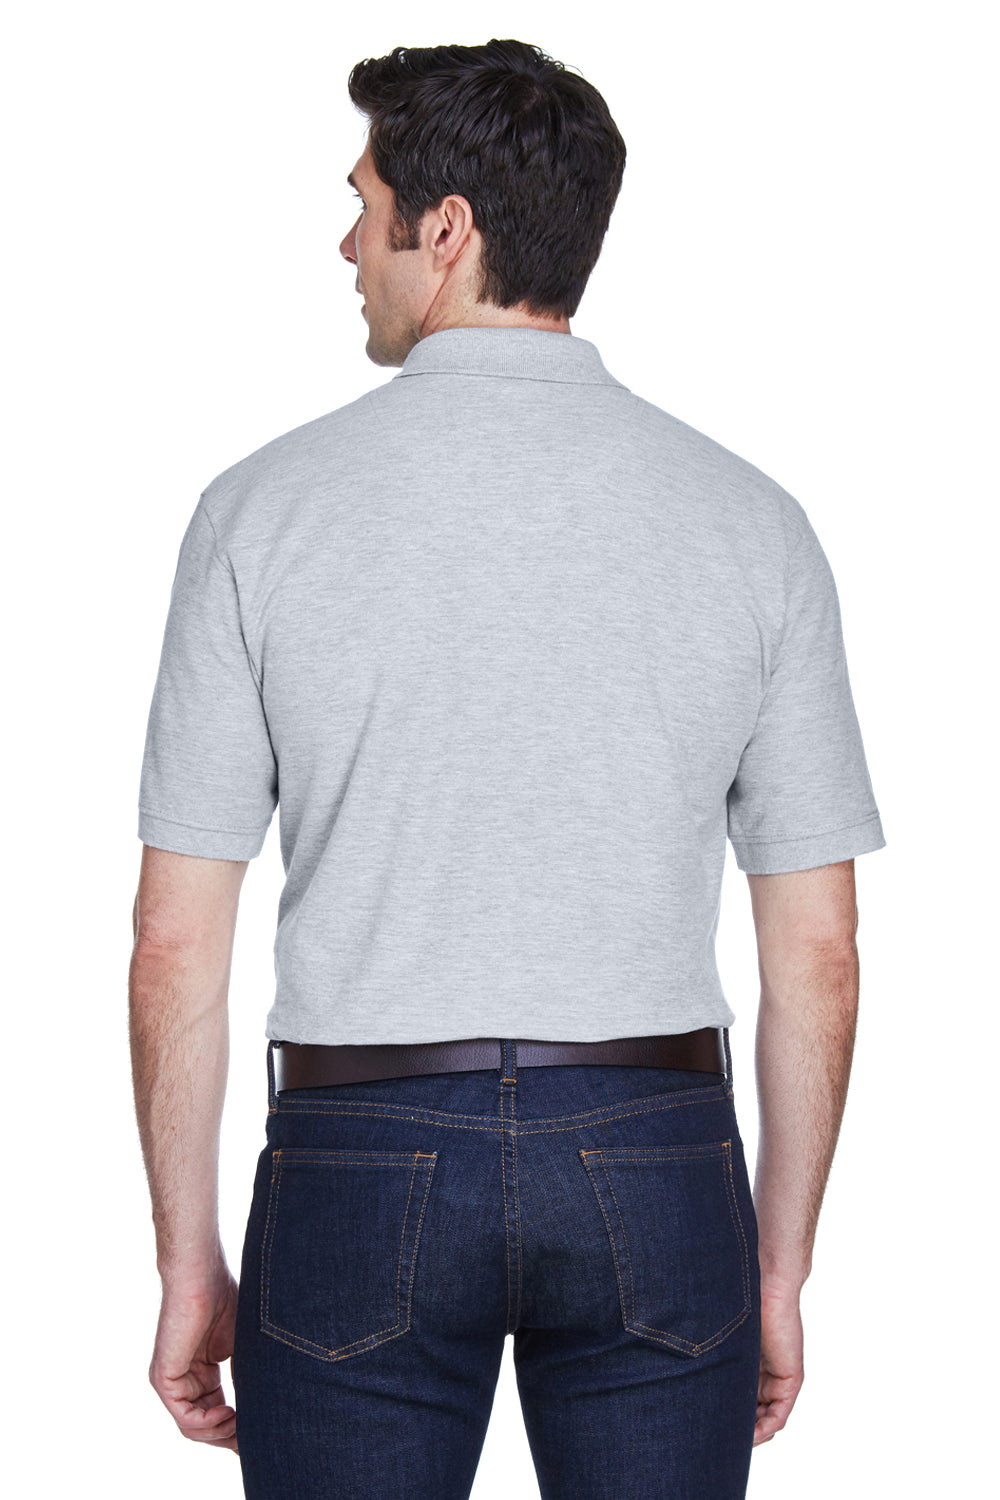 UltraClub 8540 Mens Whisper Short Sleeve Polo Shirt Heather Grey Back